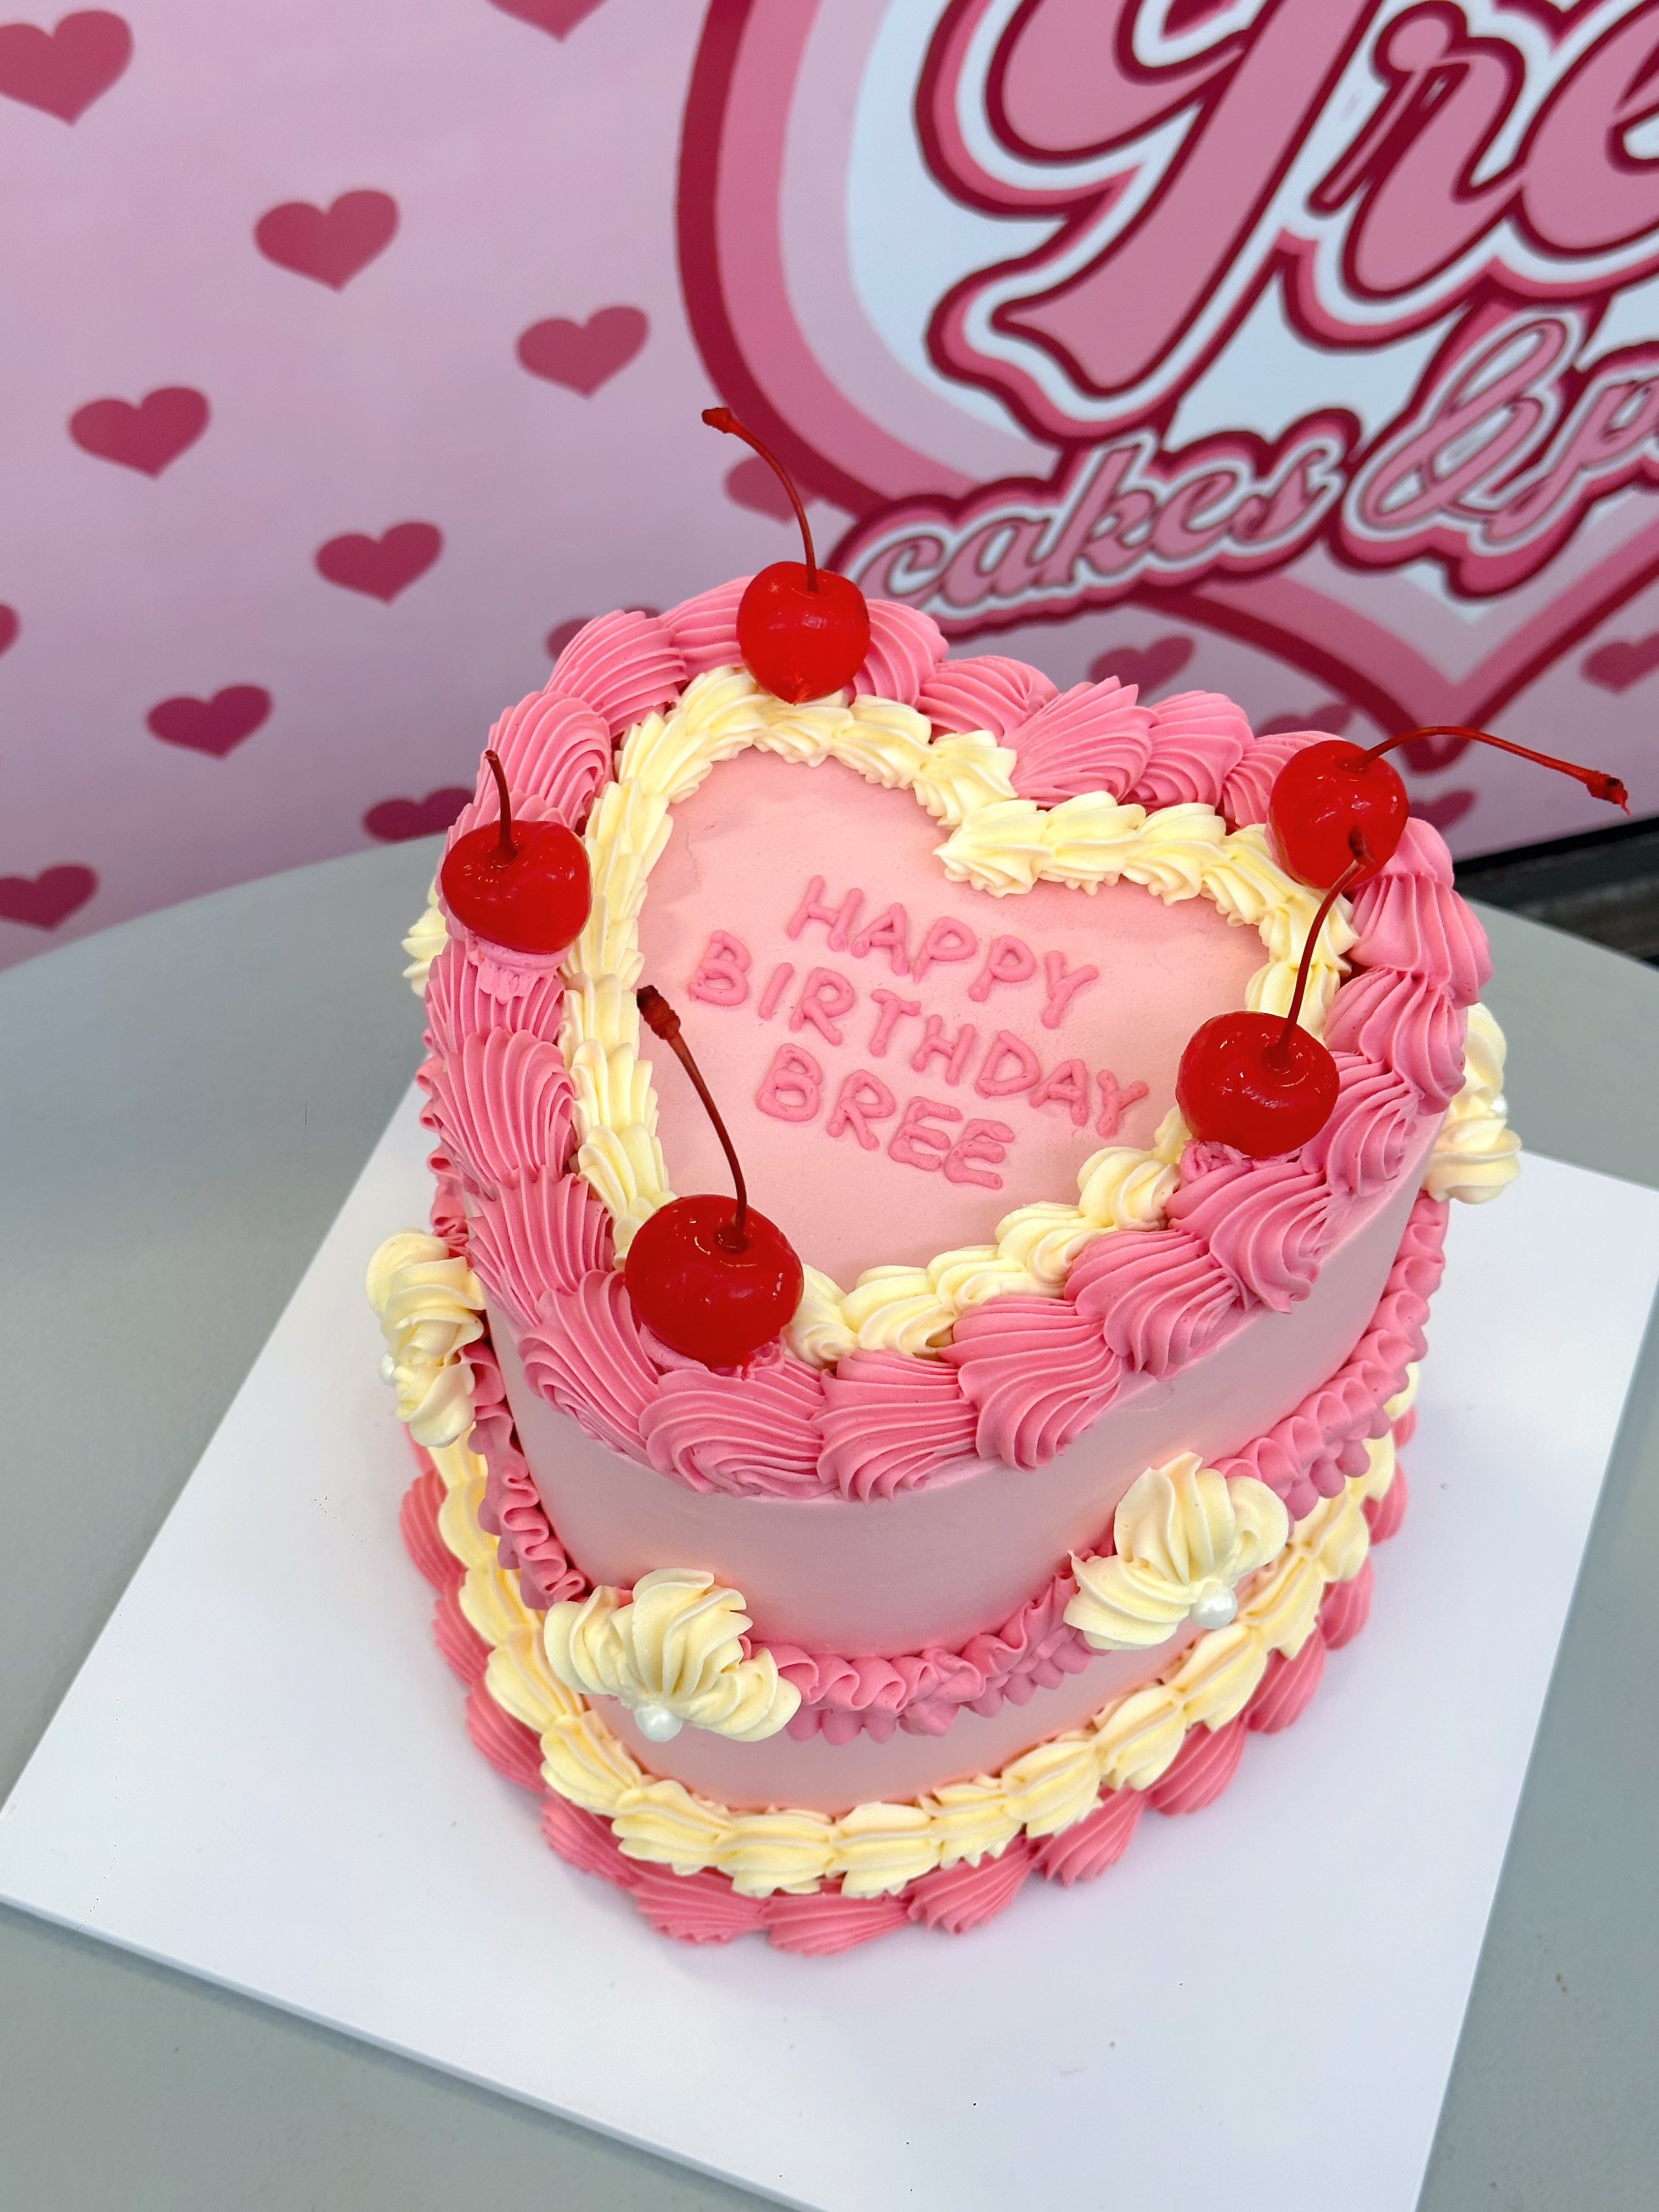 2 Tier Heart Cake by Cake Park, Heart Cake, Celeberation cakes from Chennai  | ID - 1152544